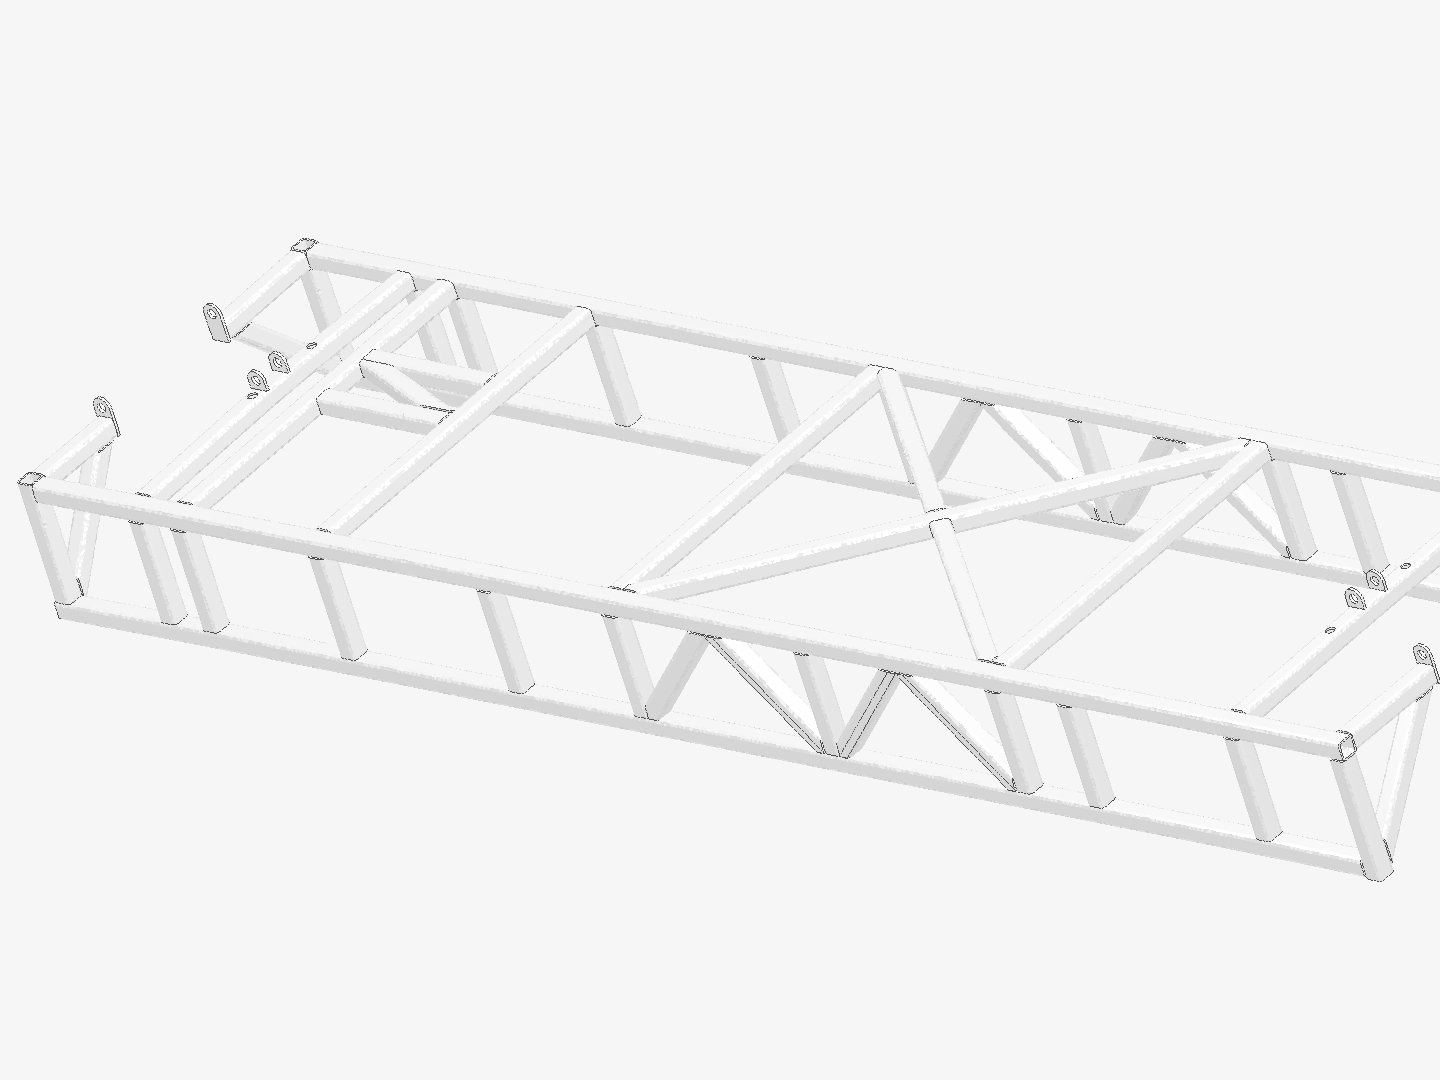 chassis simulation image